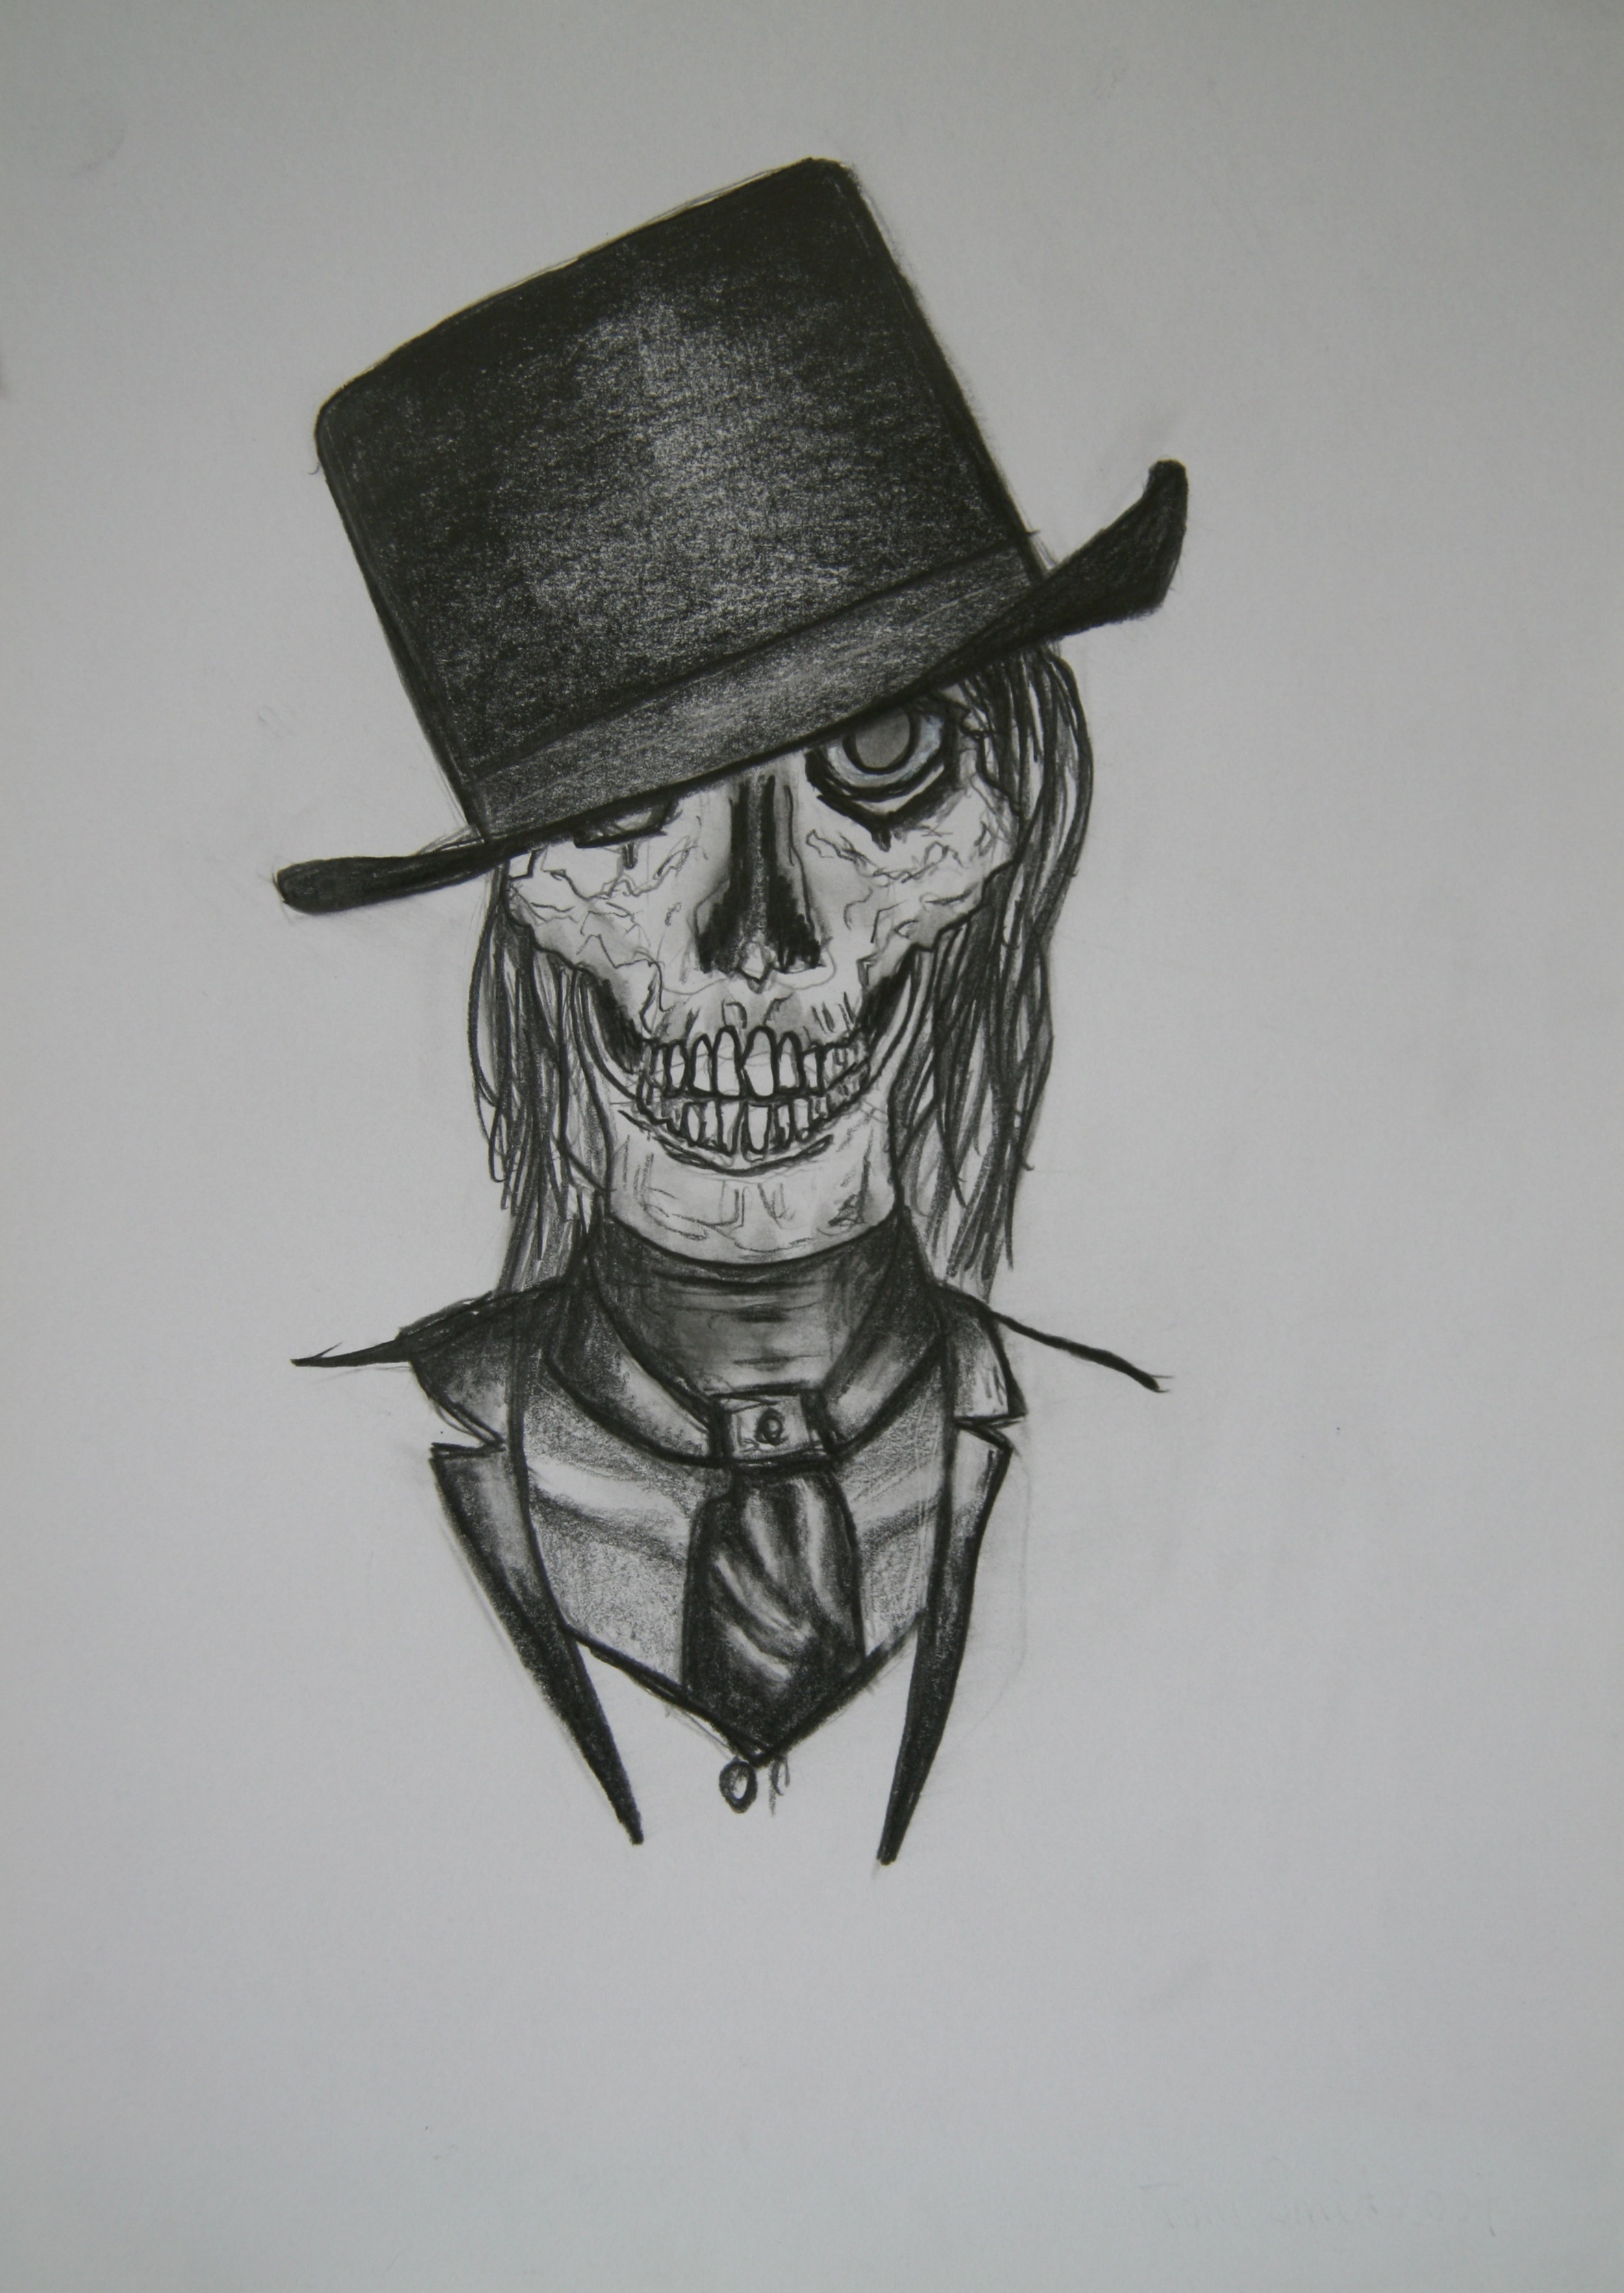 Skull 8, 30x21cm, pencil on paper